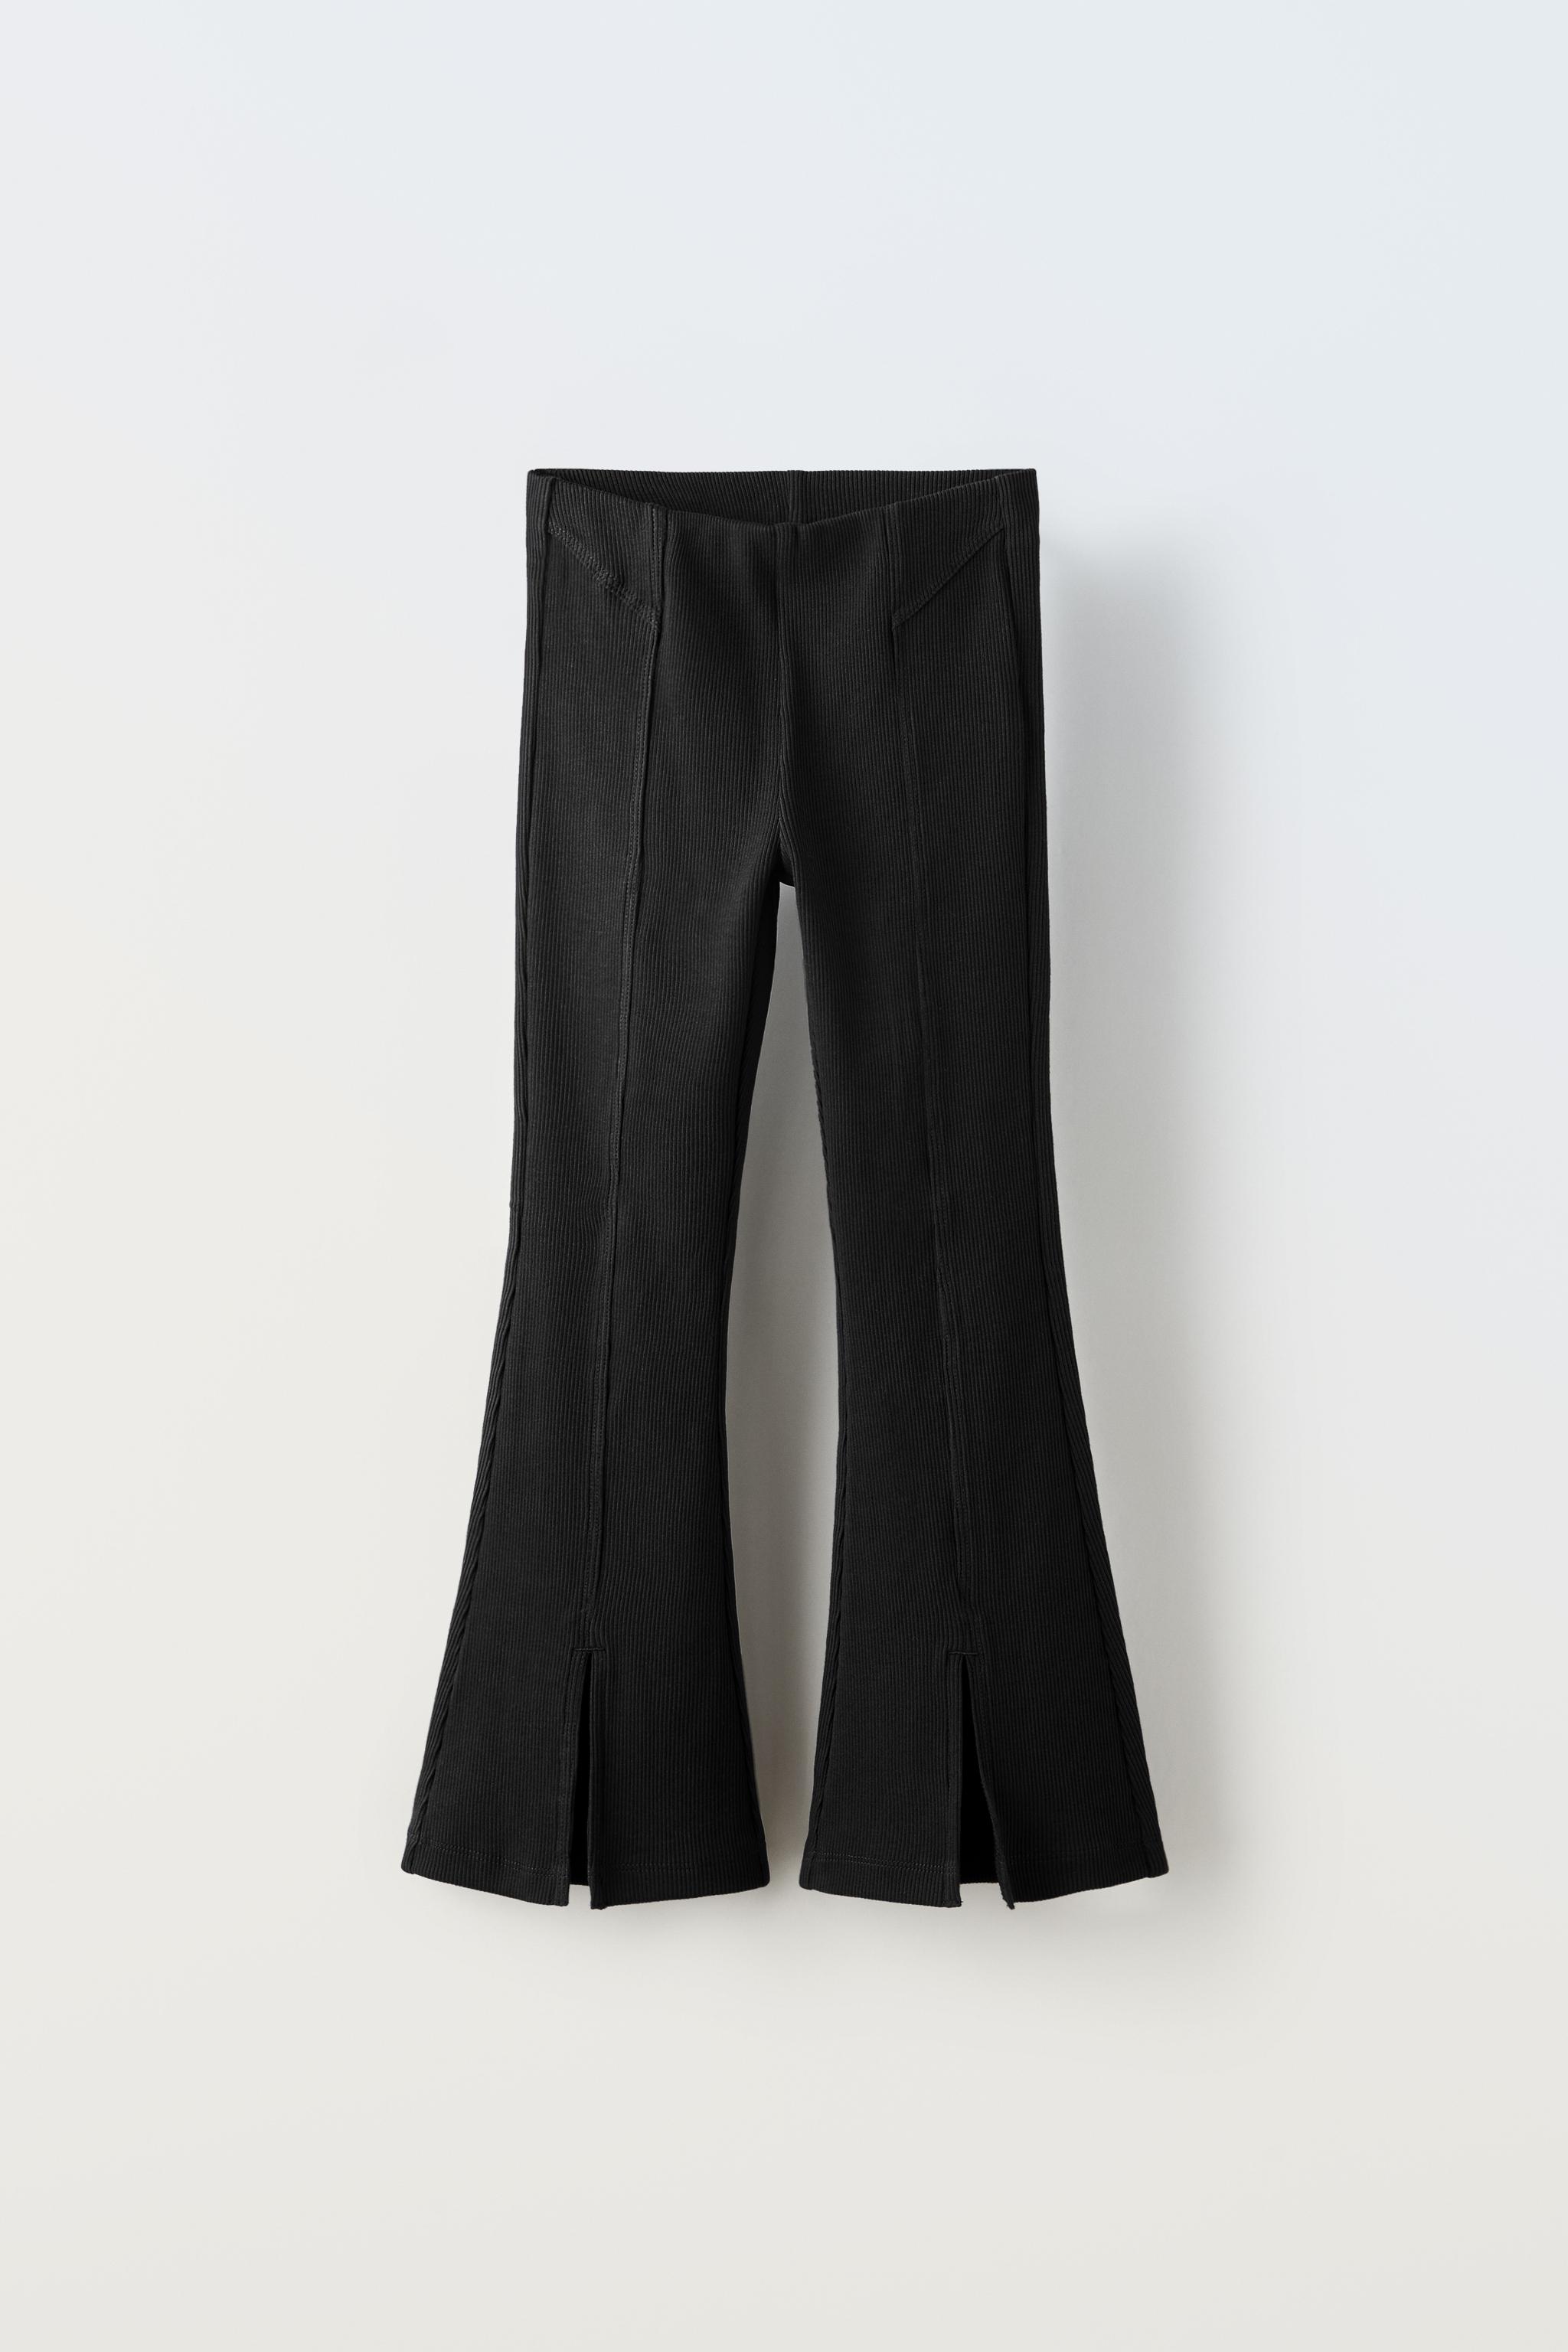 Next TECHNICAL - Leggings - Trousers - black/white marble printed/black -  Zalando.de